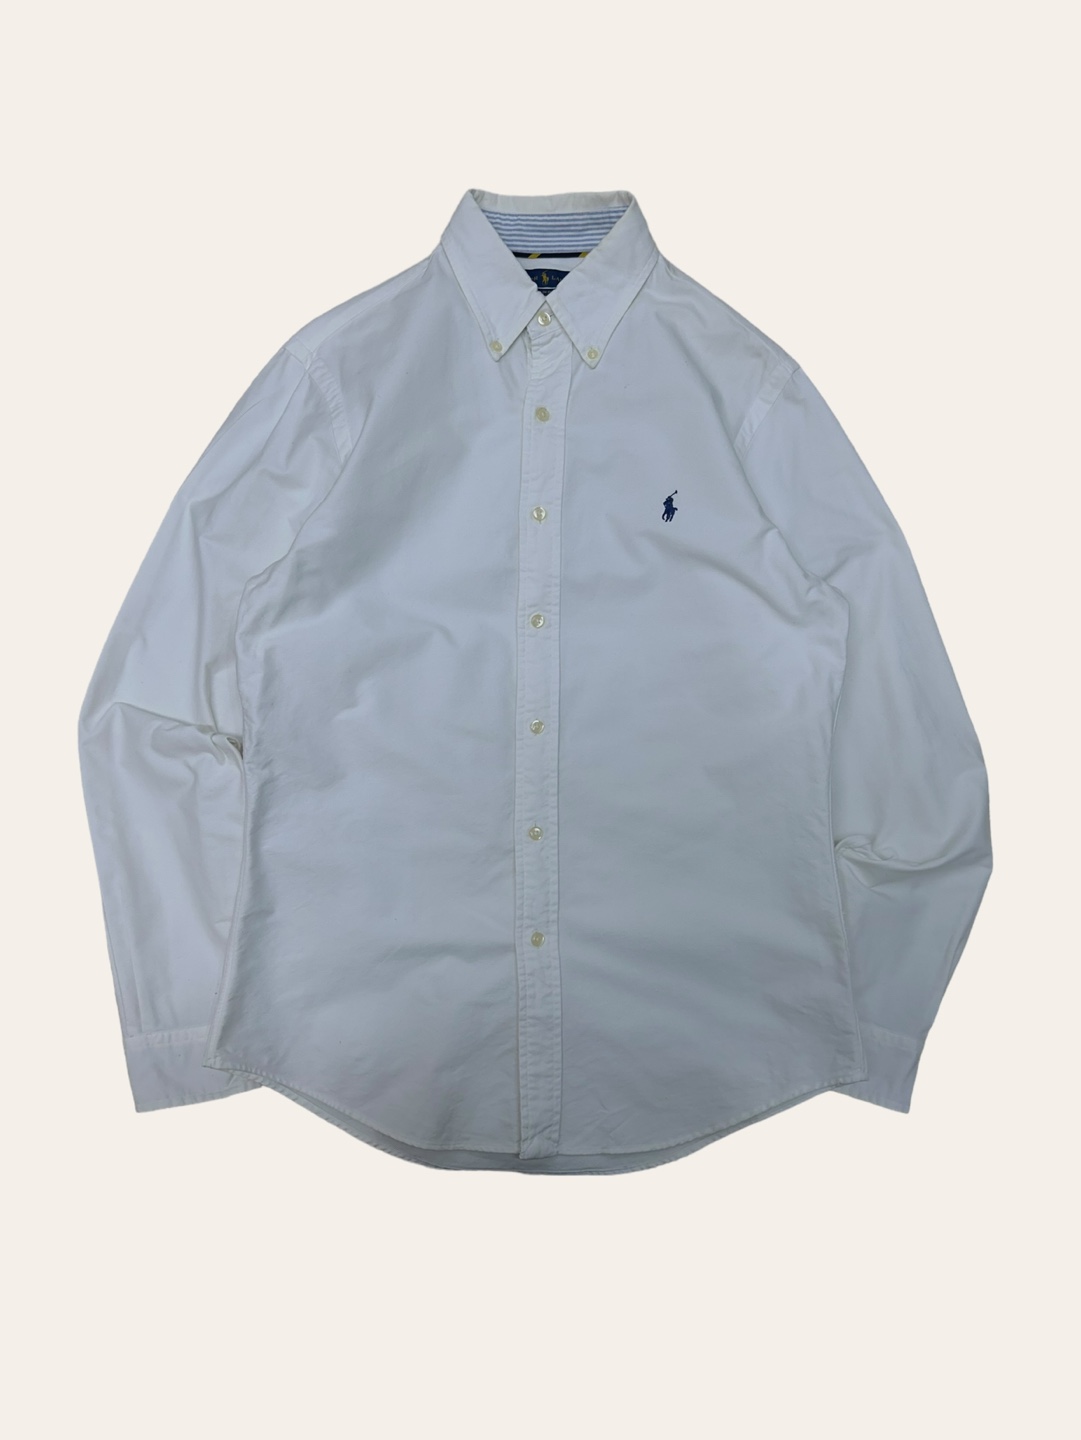 Polo ralph lauren white oxford shirt M